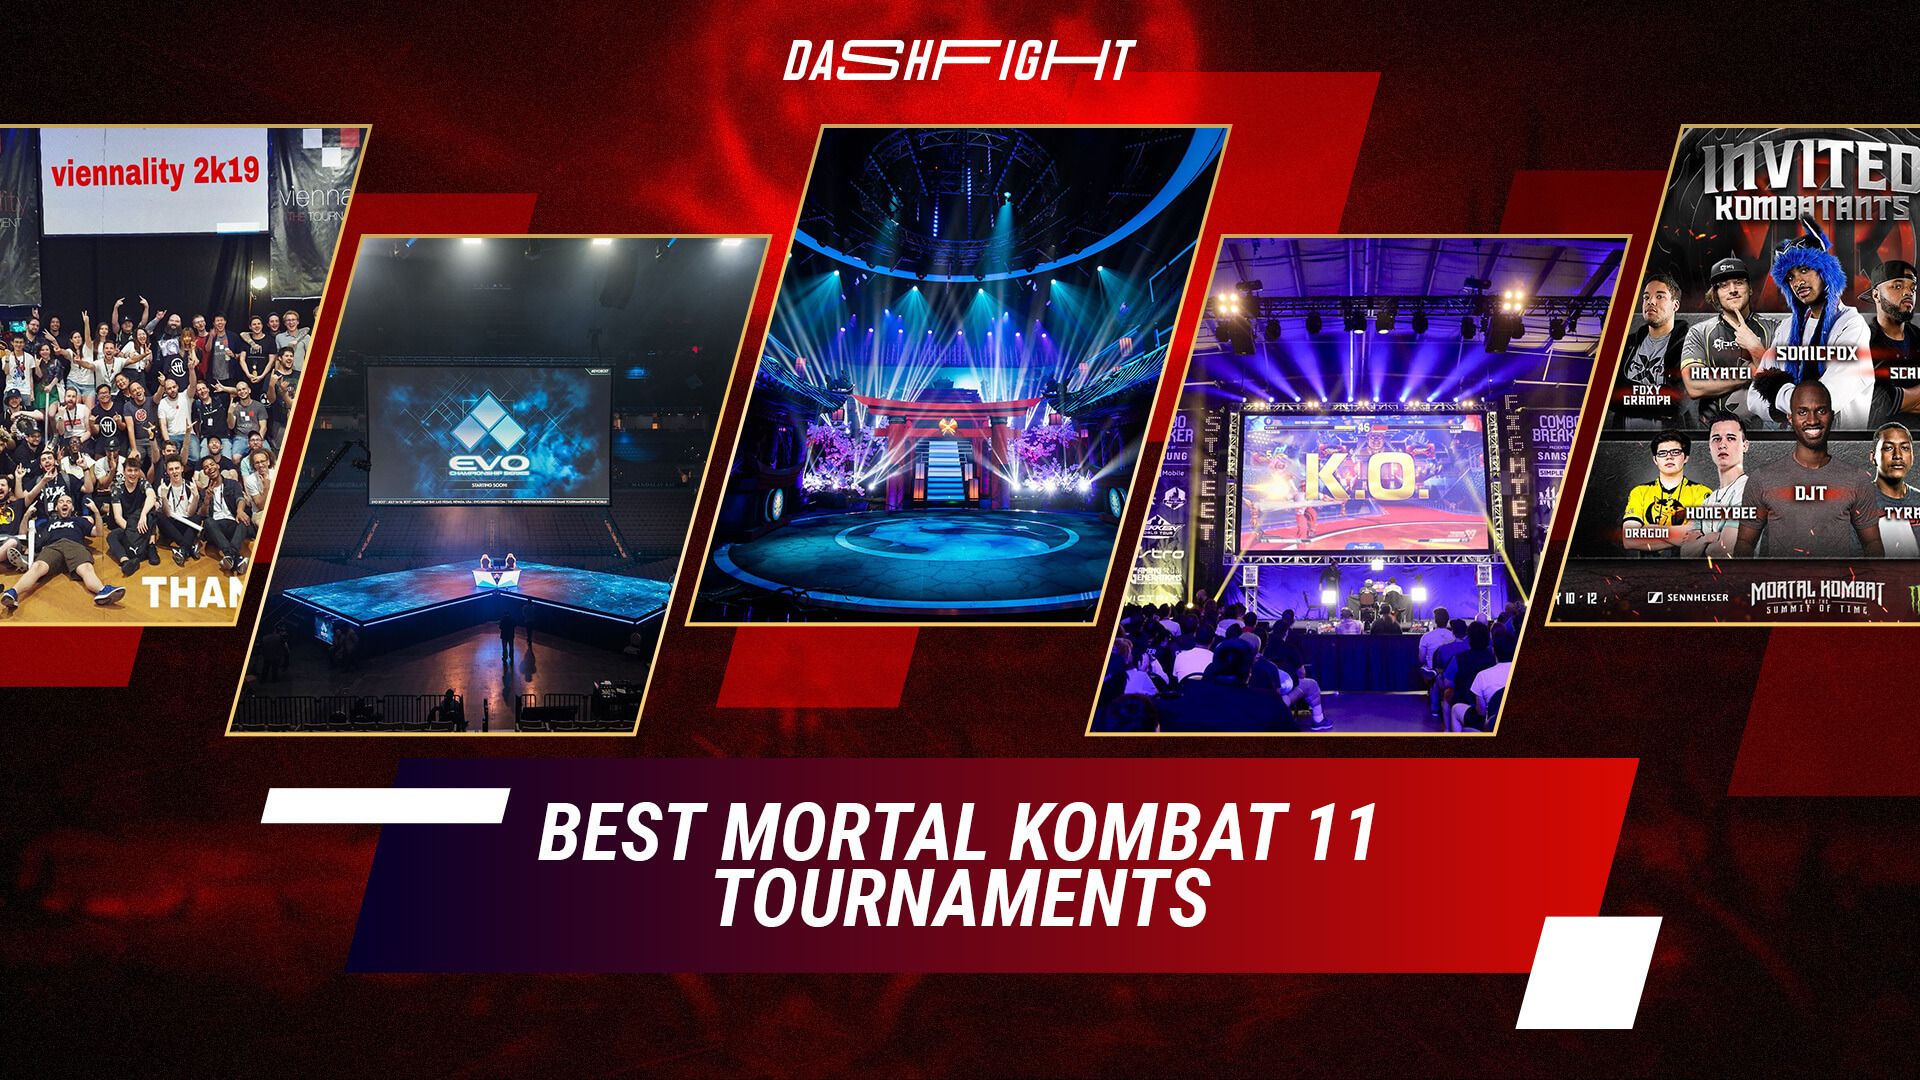 Best Mortal Kombat 11 Tournaments